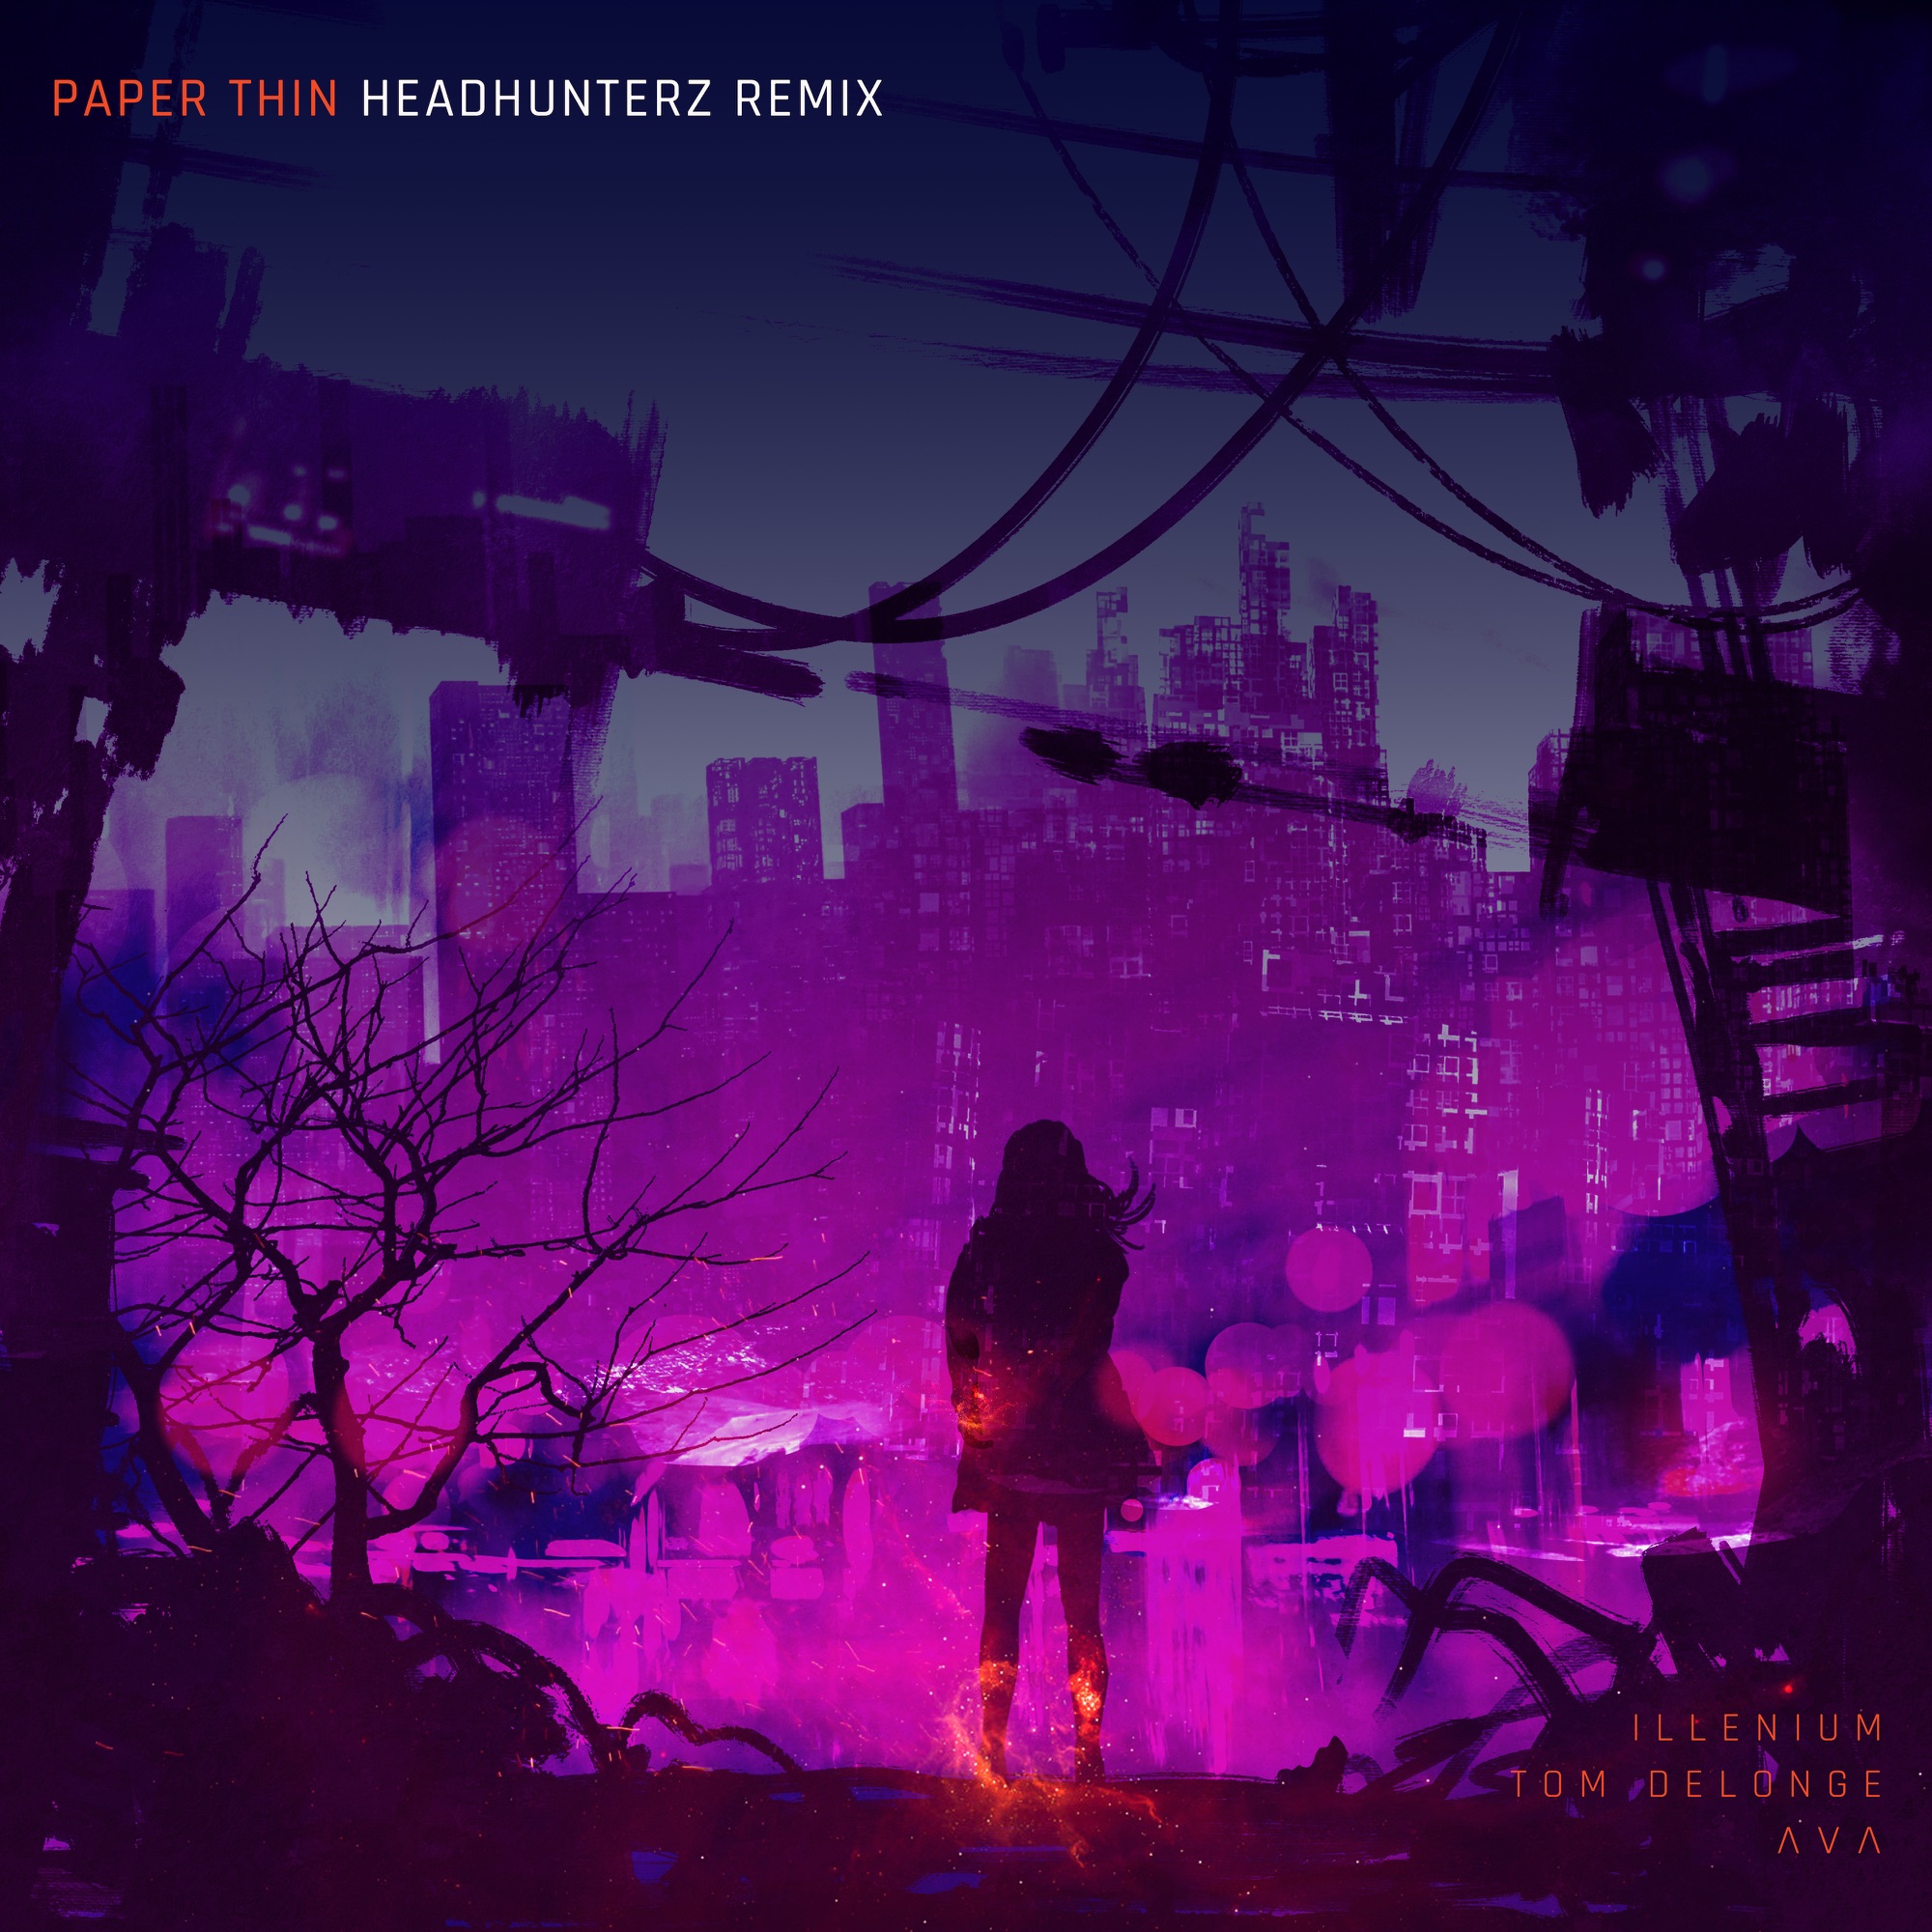 Illenium, Tom DeLonge & Angels & Airwaves - Paper Thin (Headhunterz Remix) - Single